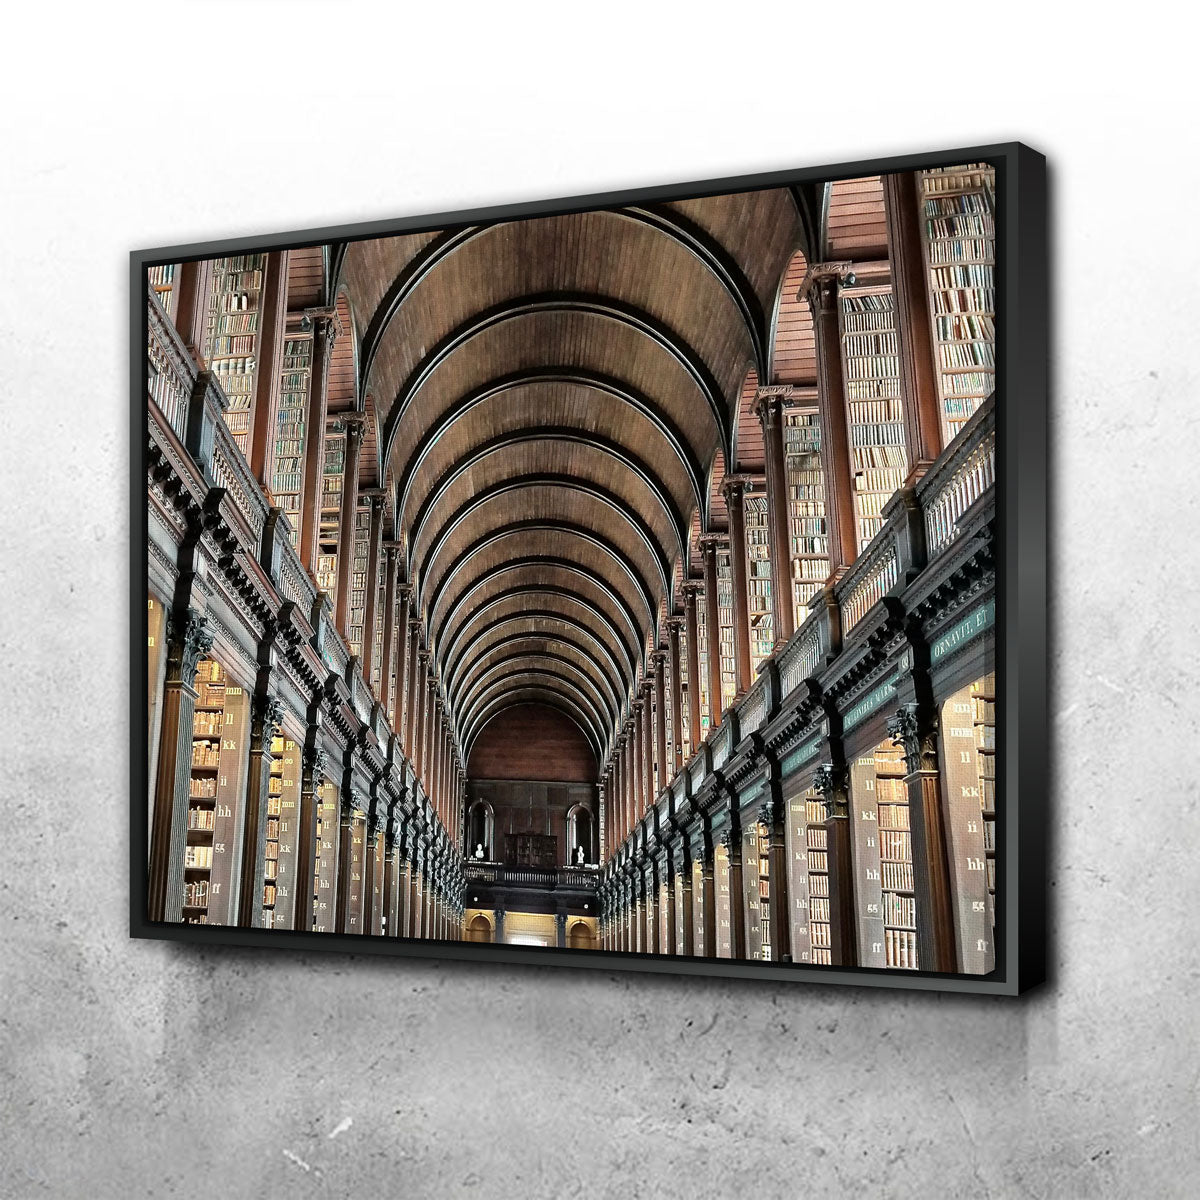 Long Room Library - Trinity College, Dublin